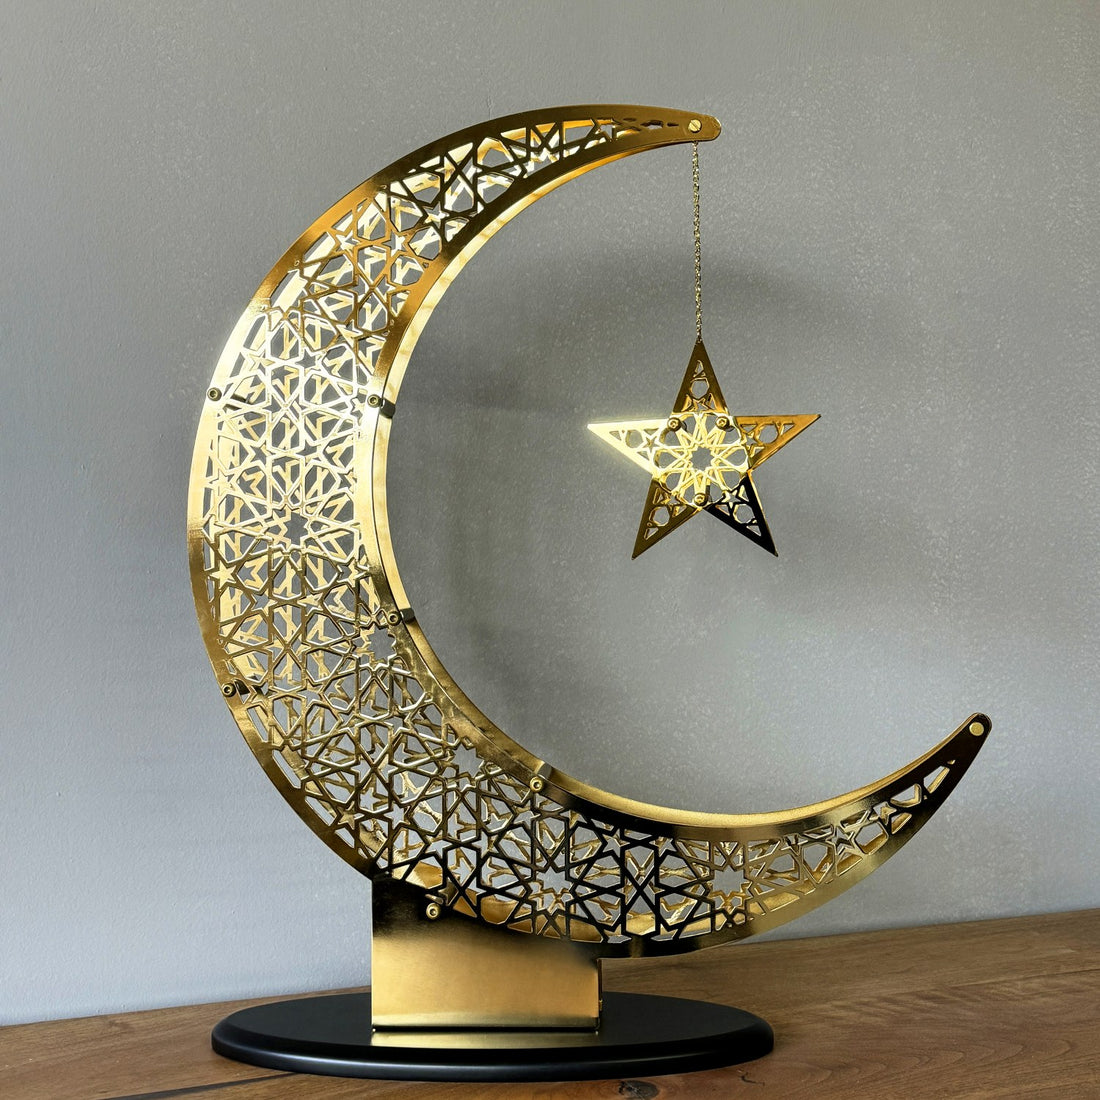 crescent-and-star-shiny-metal-islamic-home-decoration-ramadan-decor-gold-colored-eid-gift-shukranislamicarts